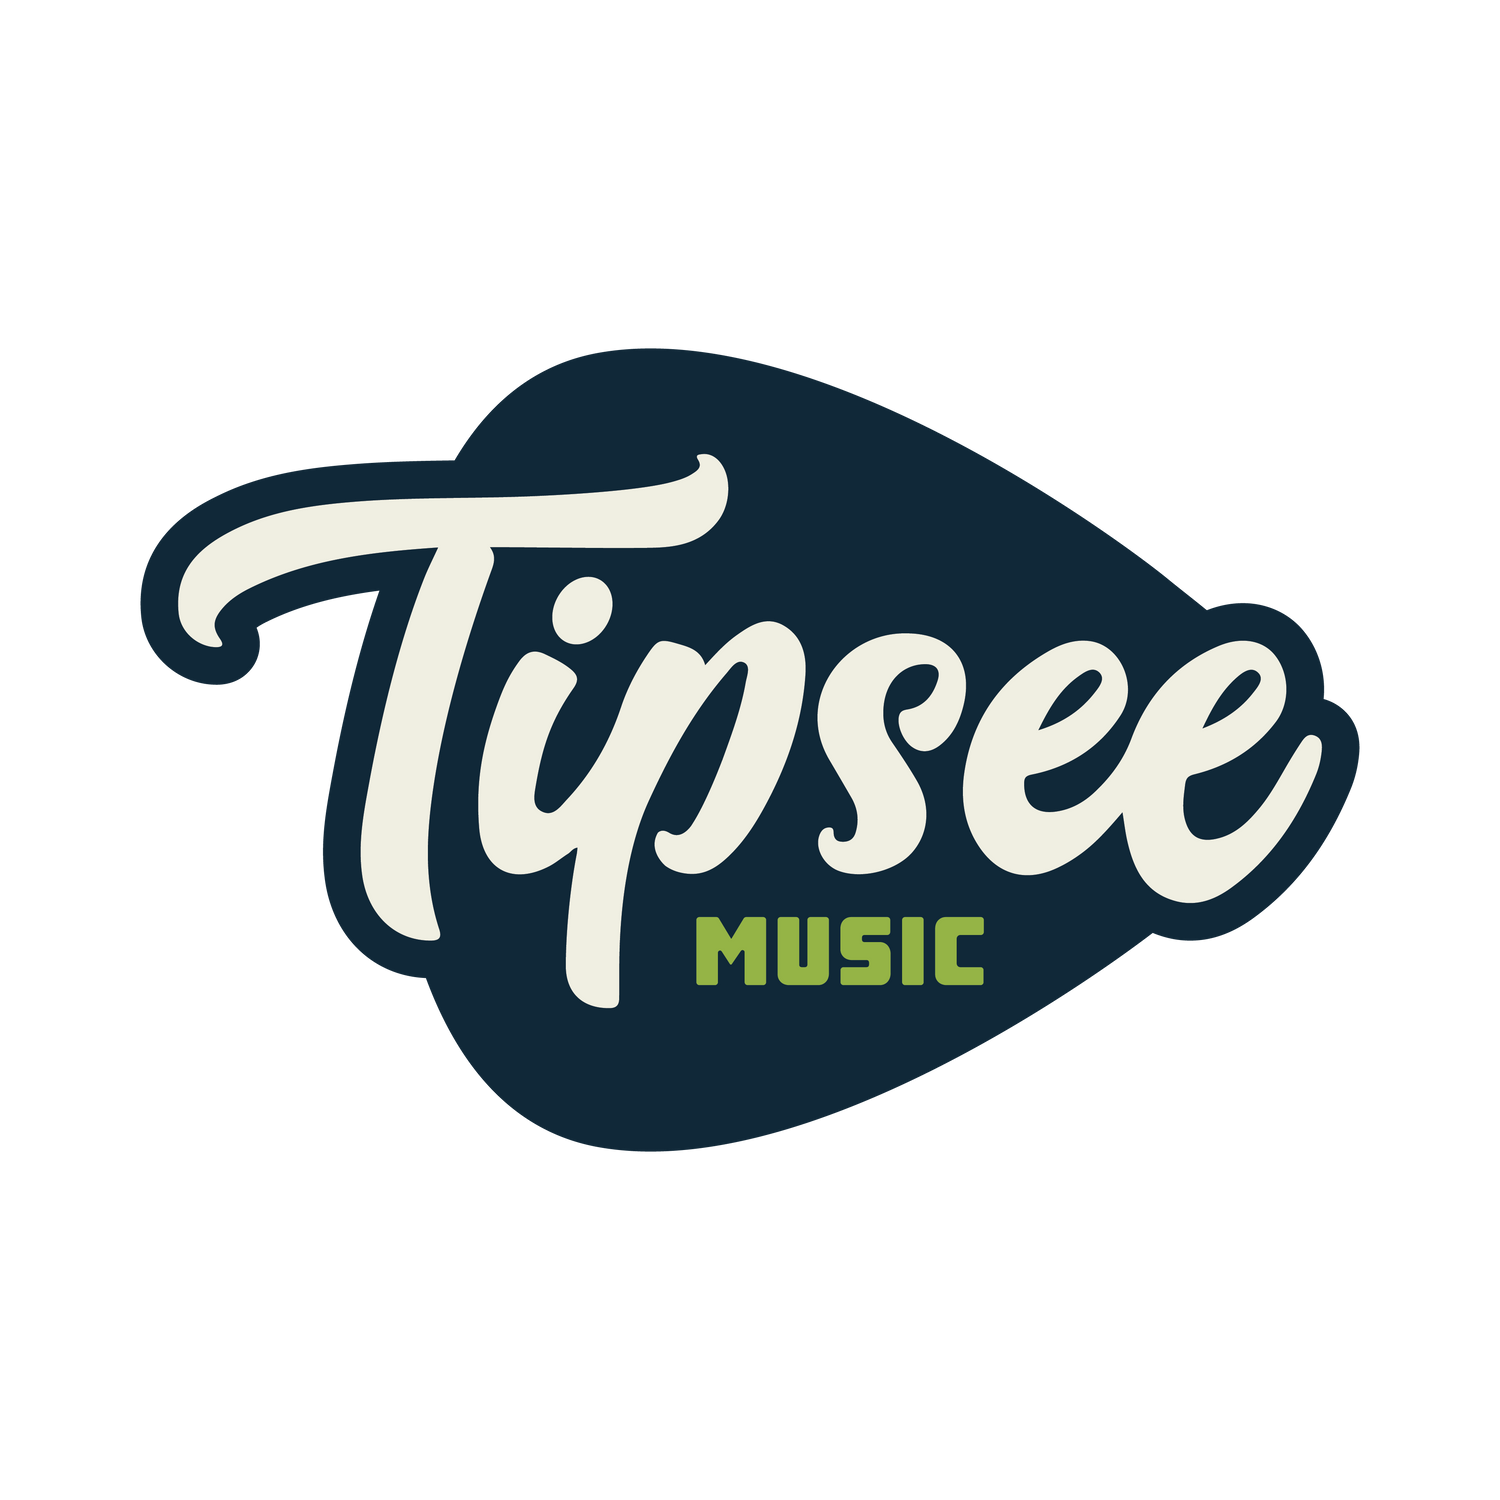 TipSee Music Gear